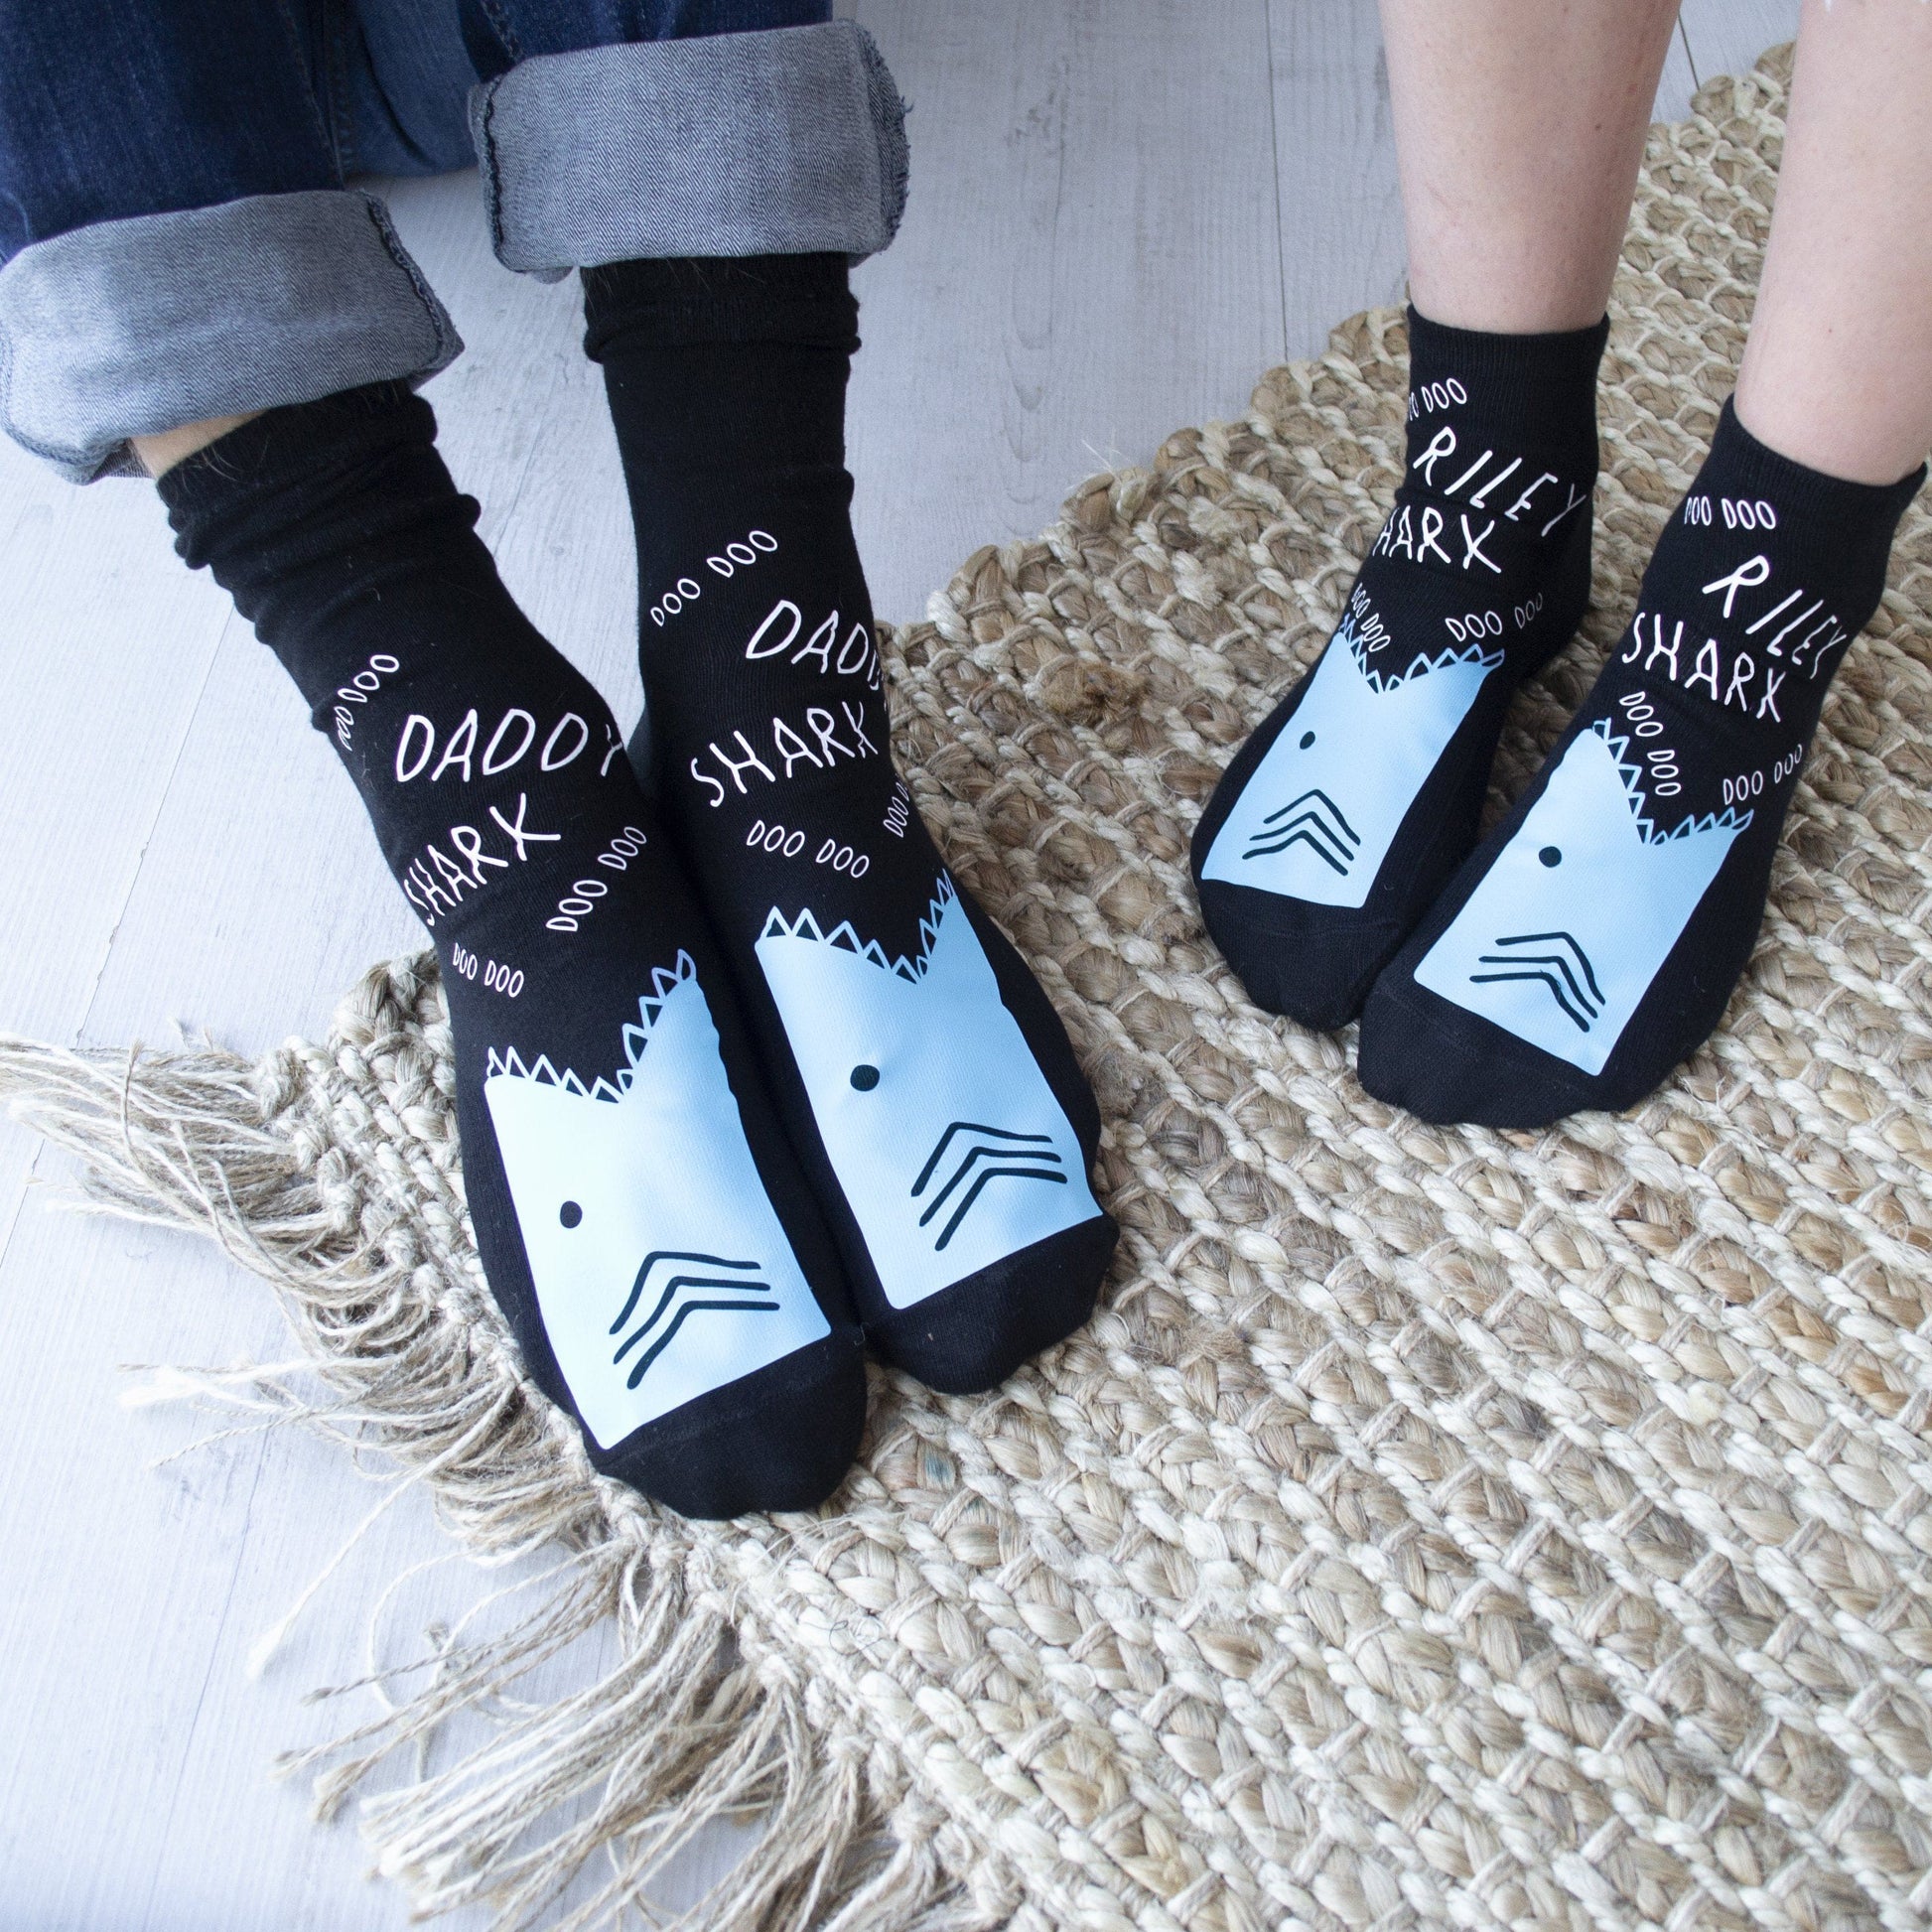 Personalised Shark Socks, Socks, - ALPHS 